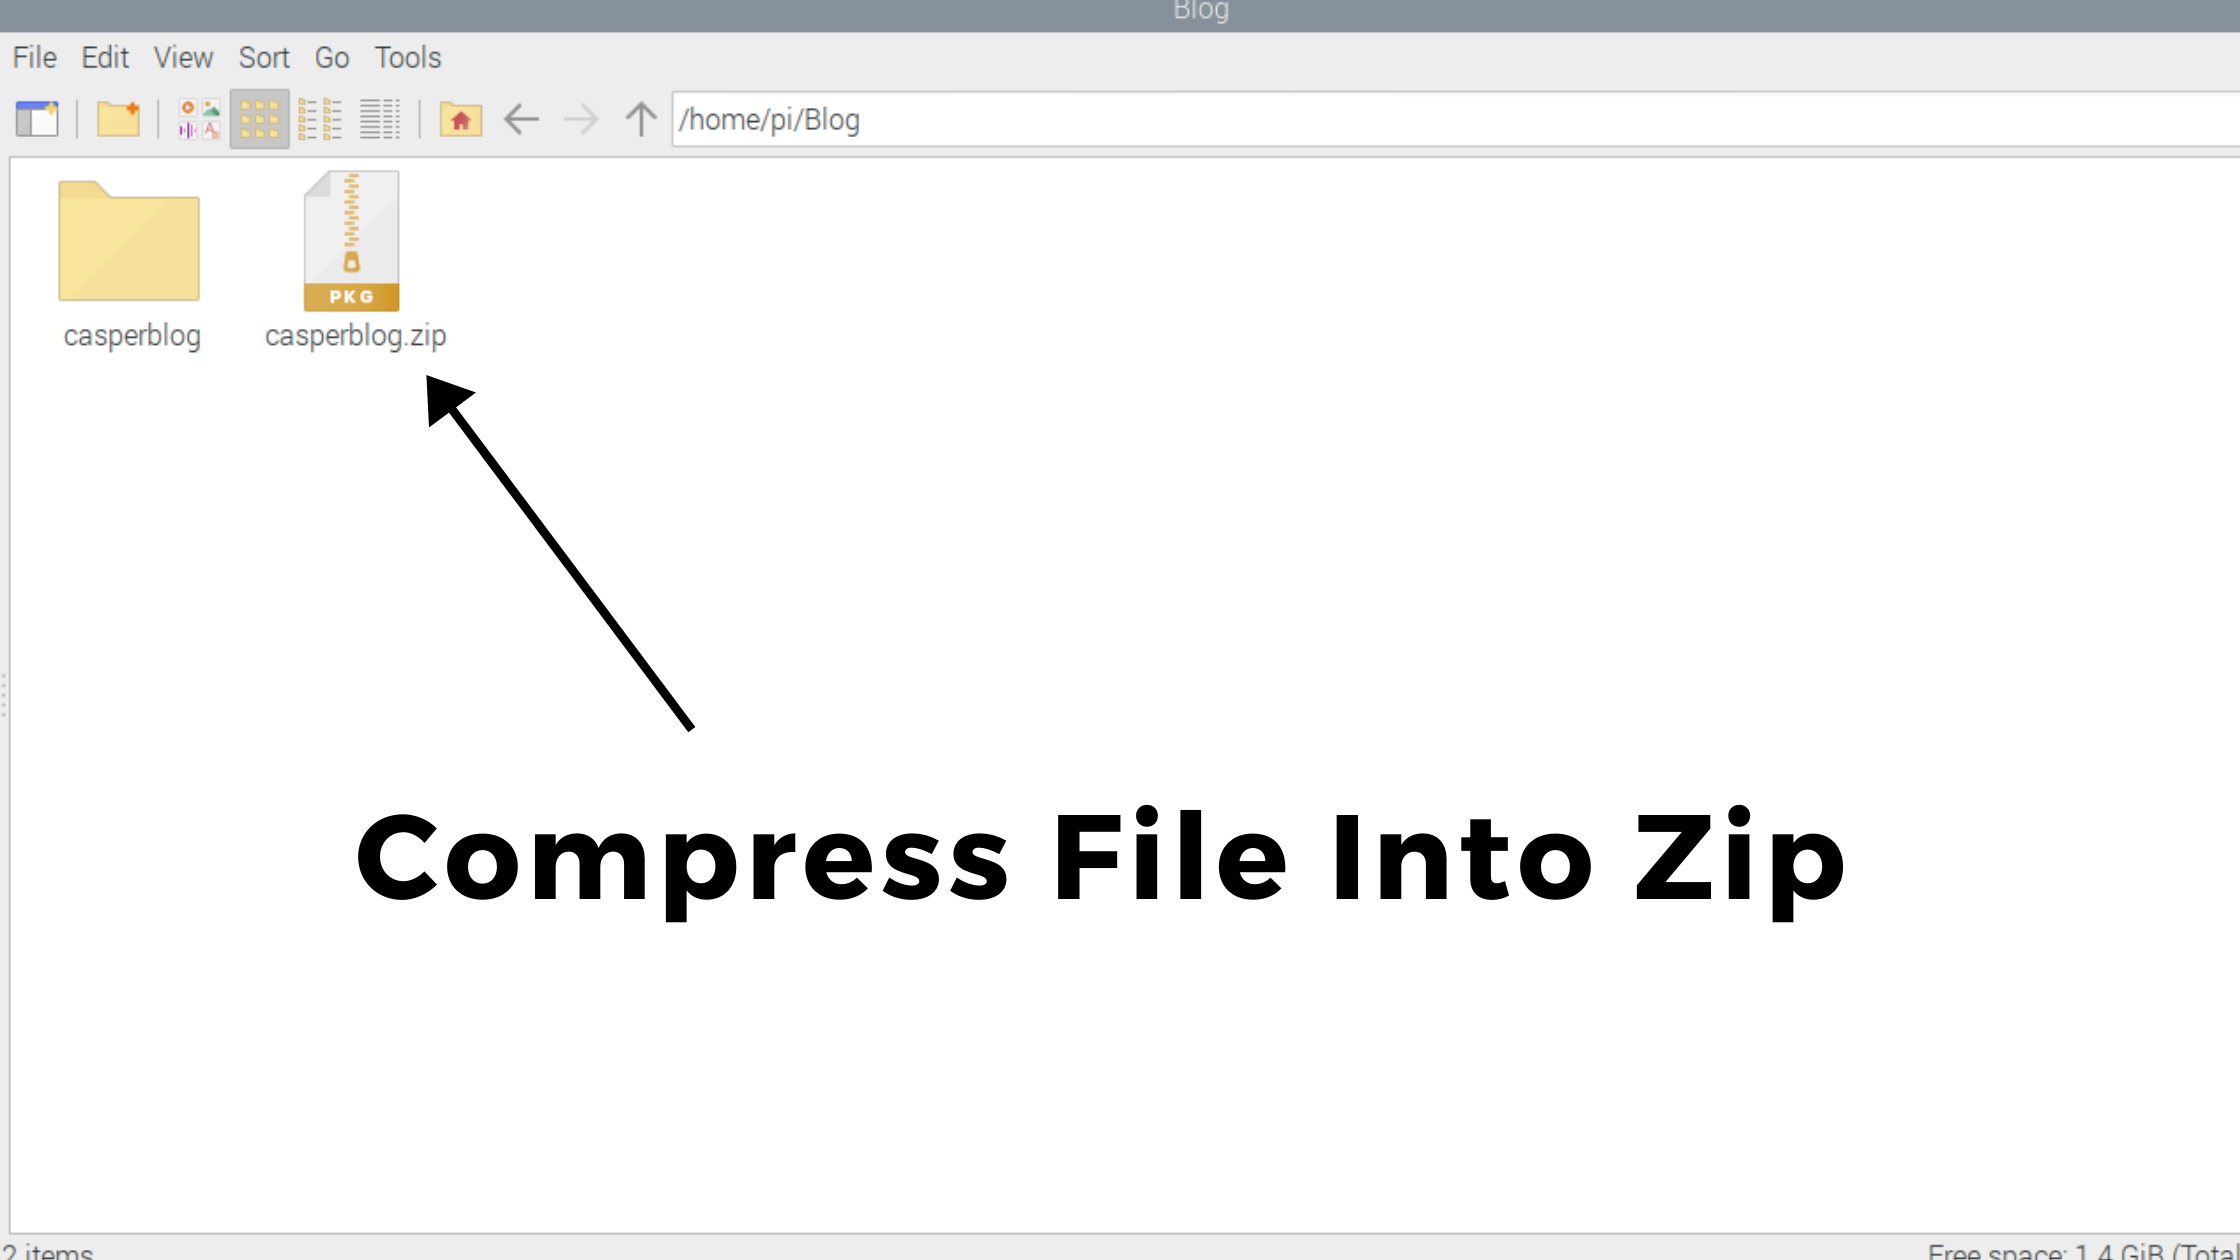 Compress Folder Into Zip